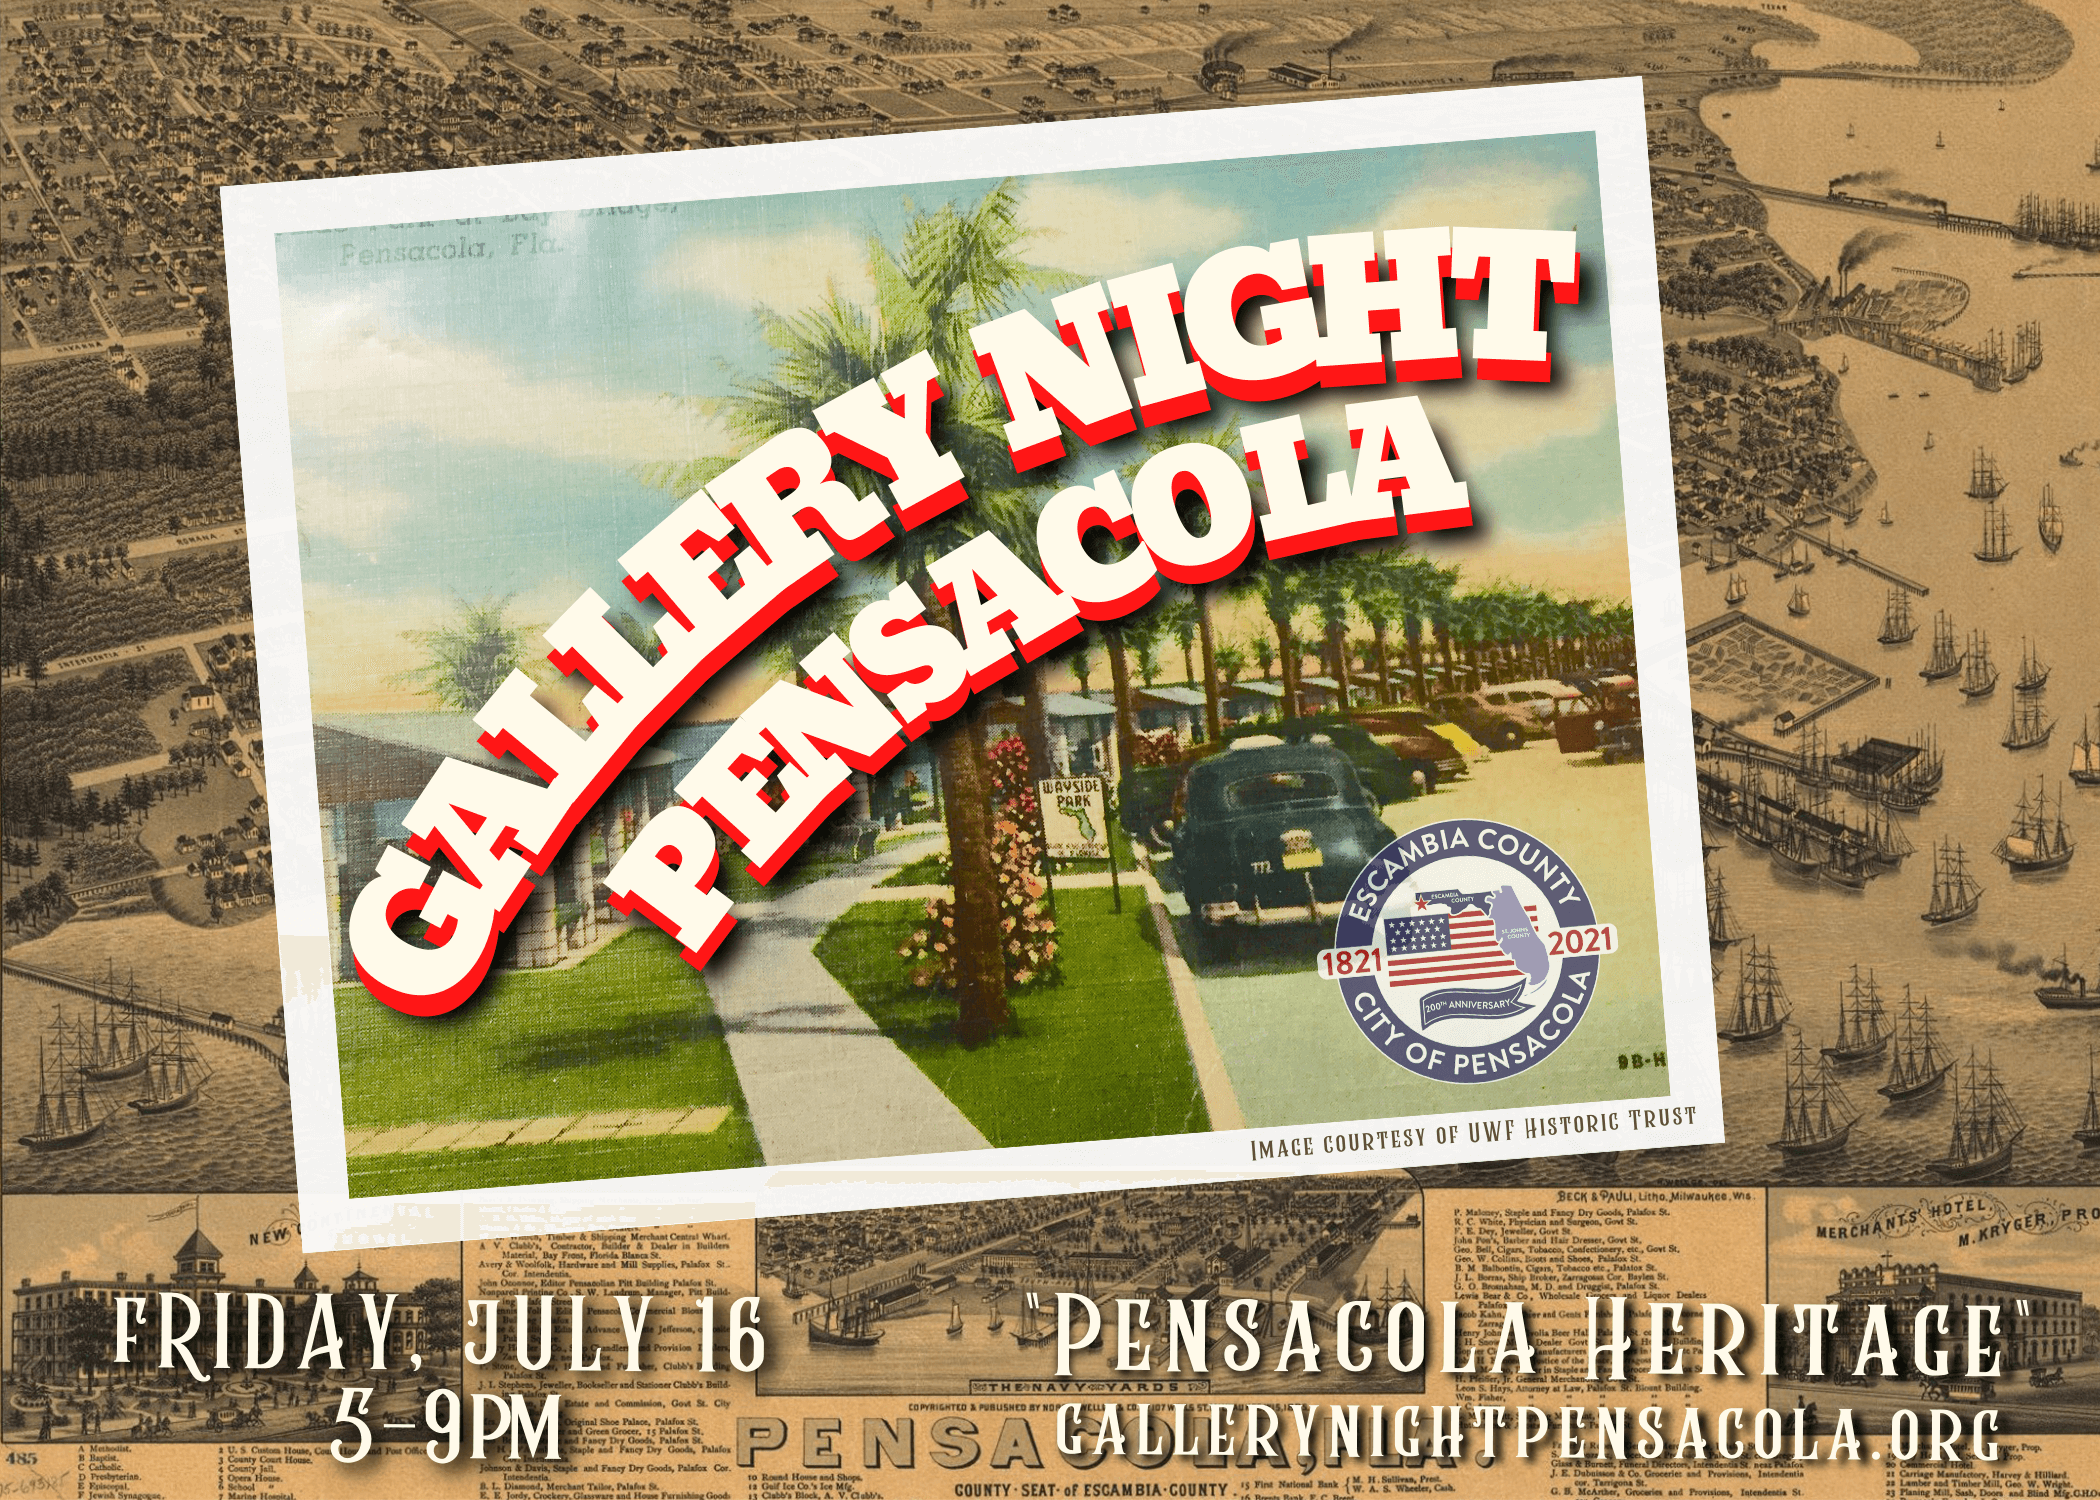 Gallery Night July 16, 2021 - Gallery Night Pensacola